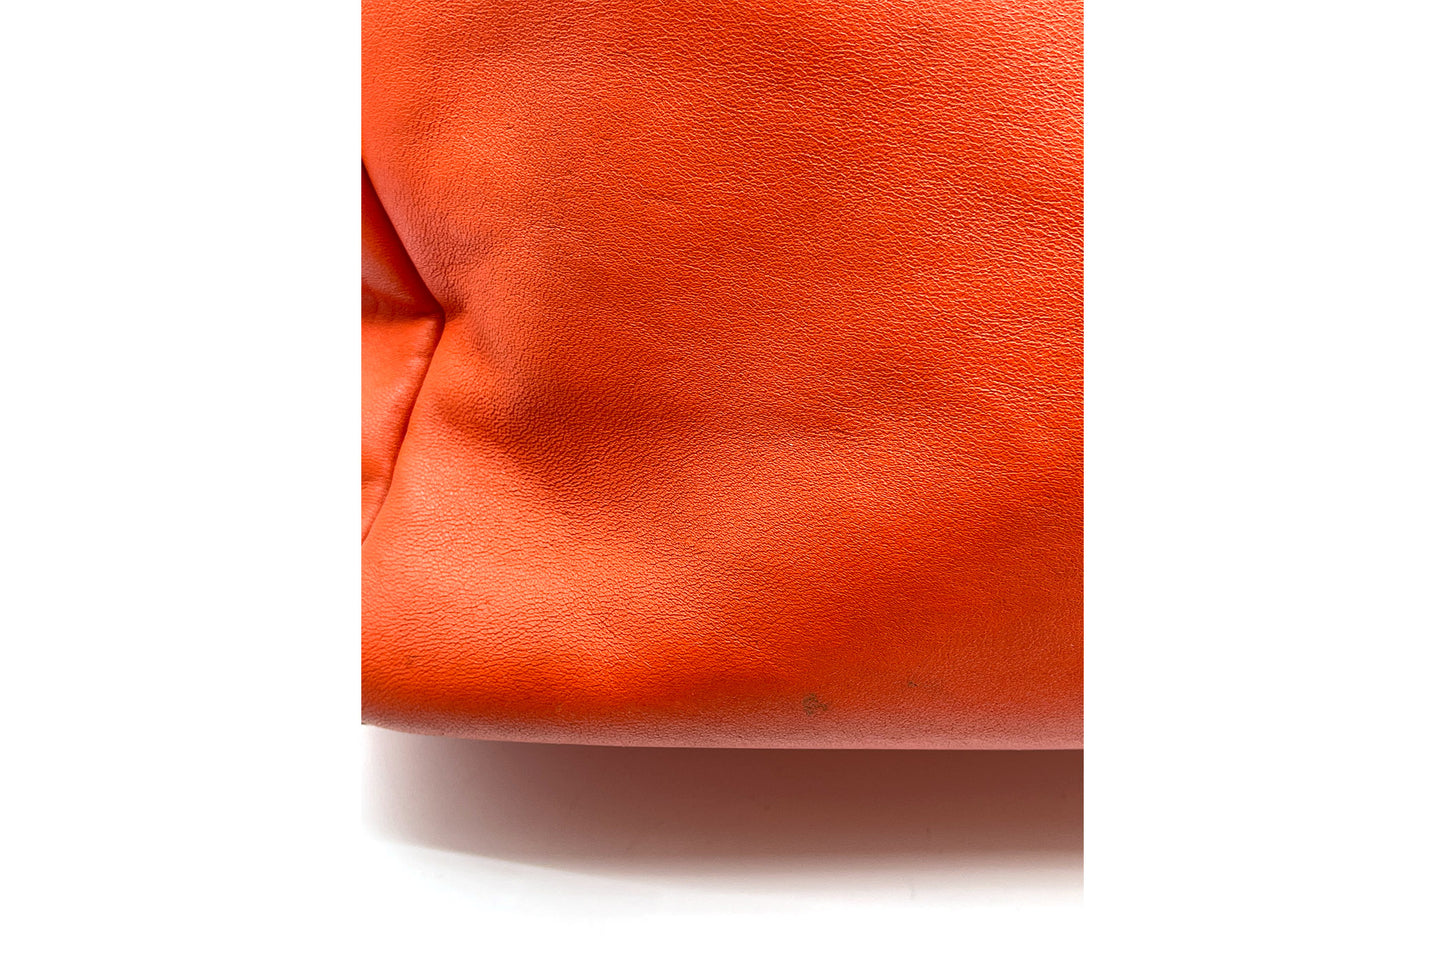 Calvin Klein Orange Calf Leather Boston Bag